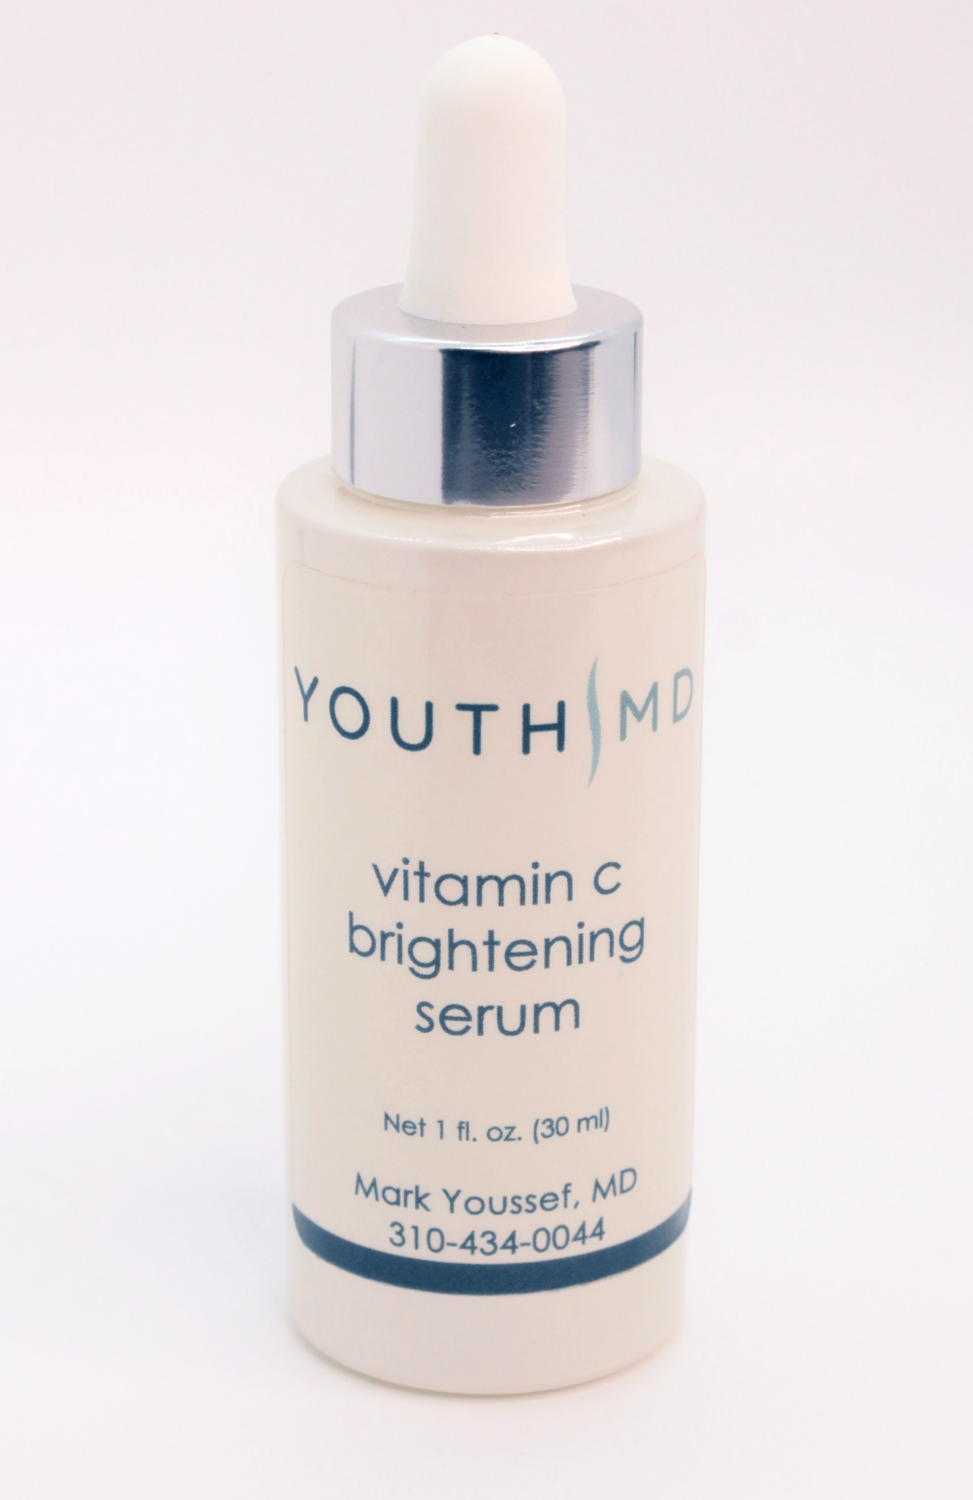 Youth MD | Vitamin C Brightening Serum